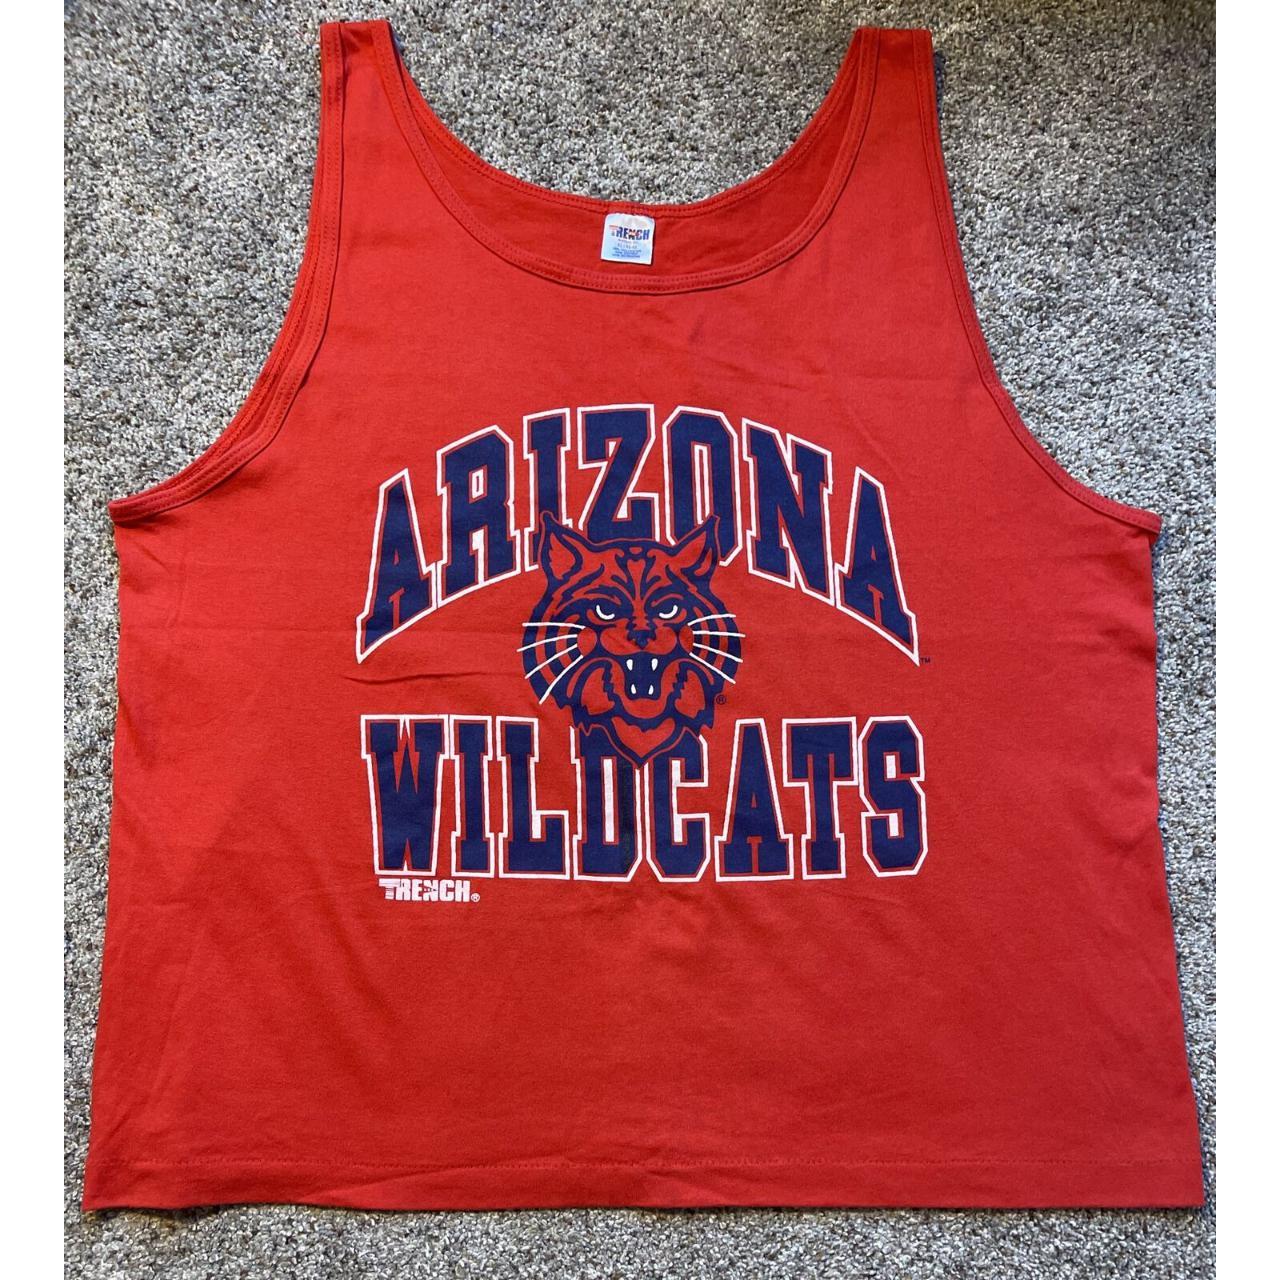 Vintage Arizona Wildcats Basketball Jersey XL